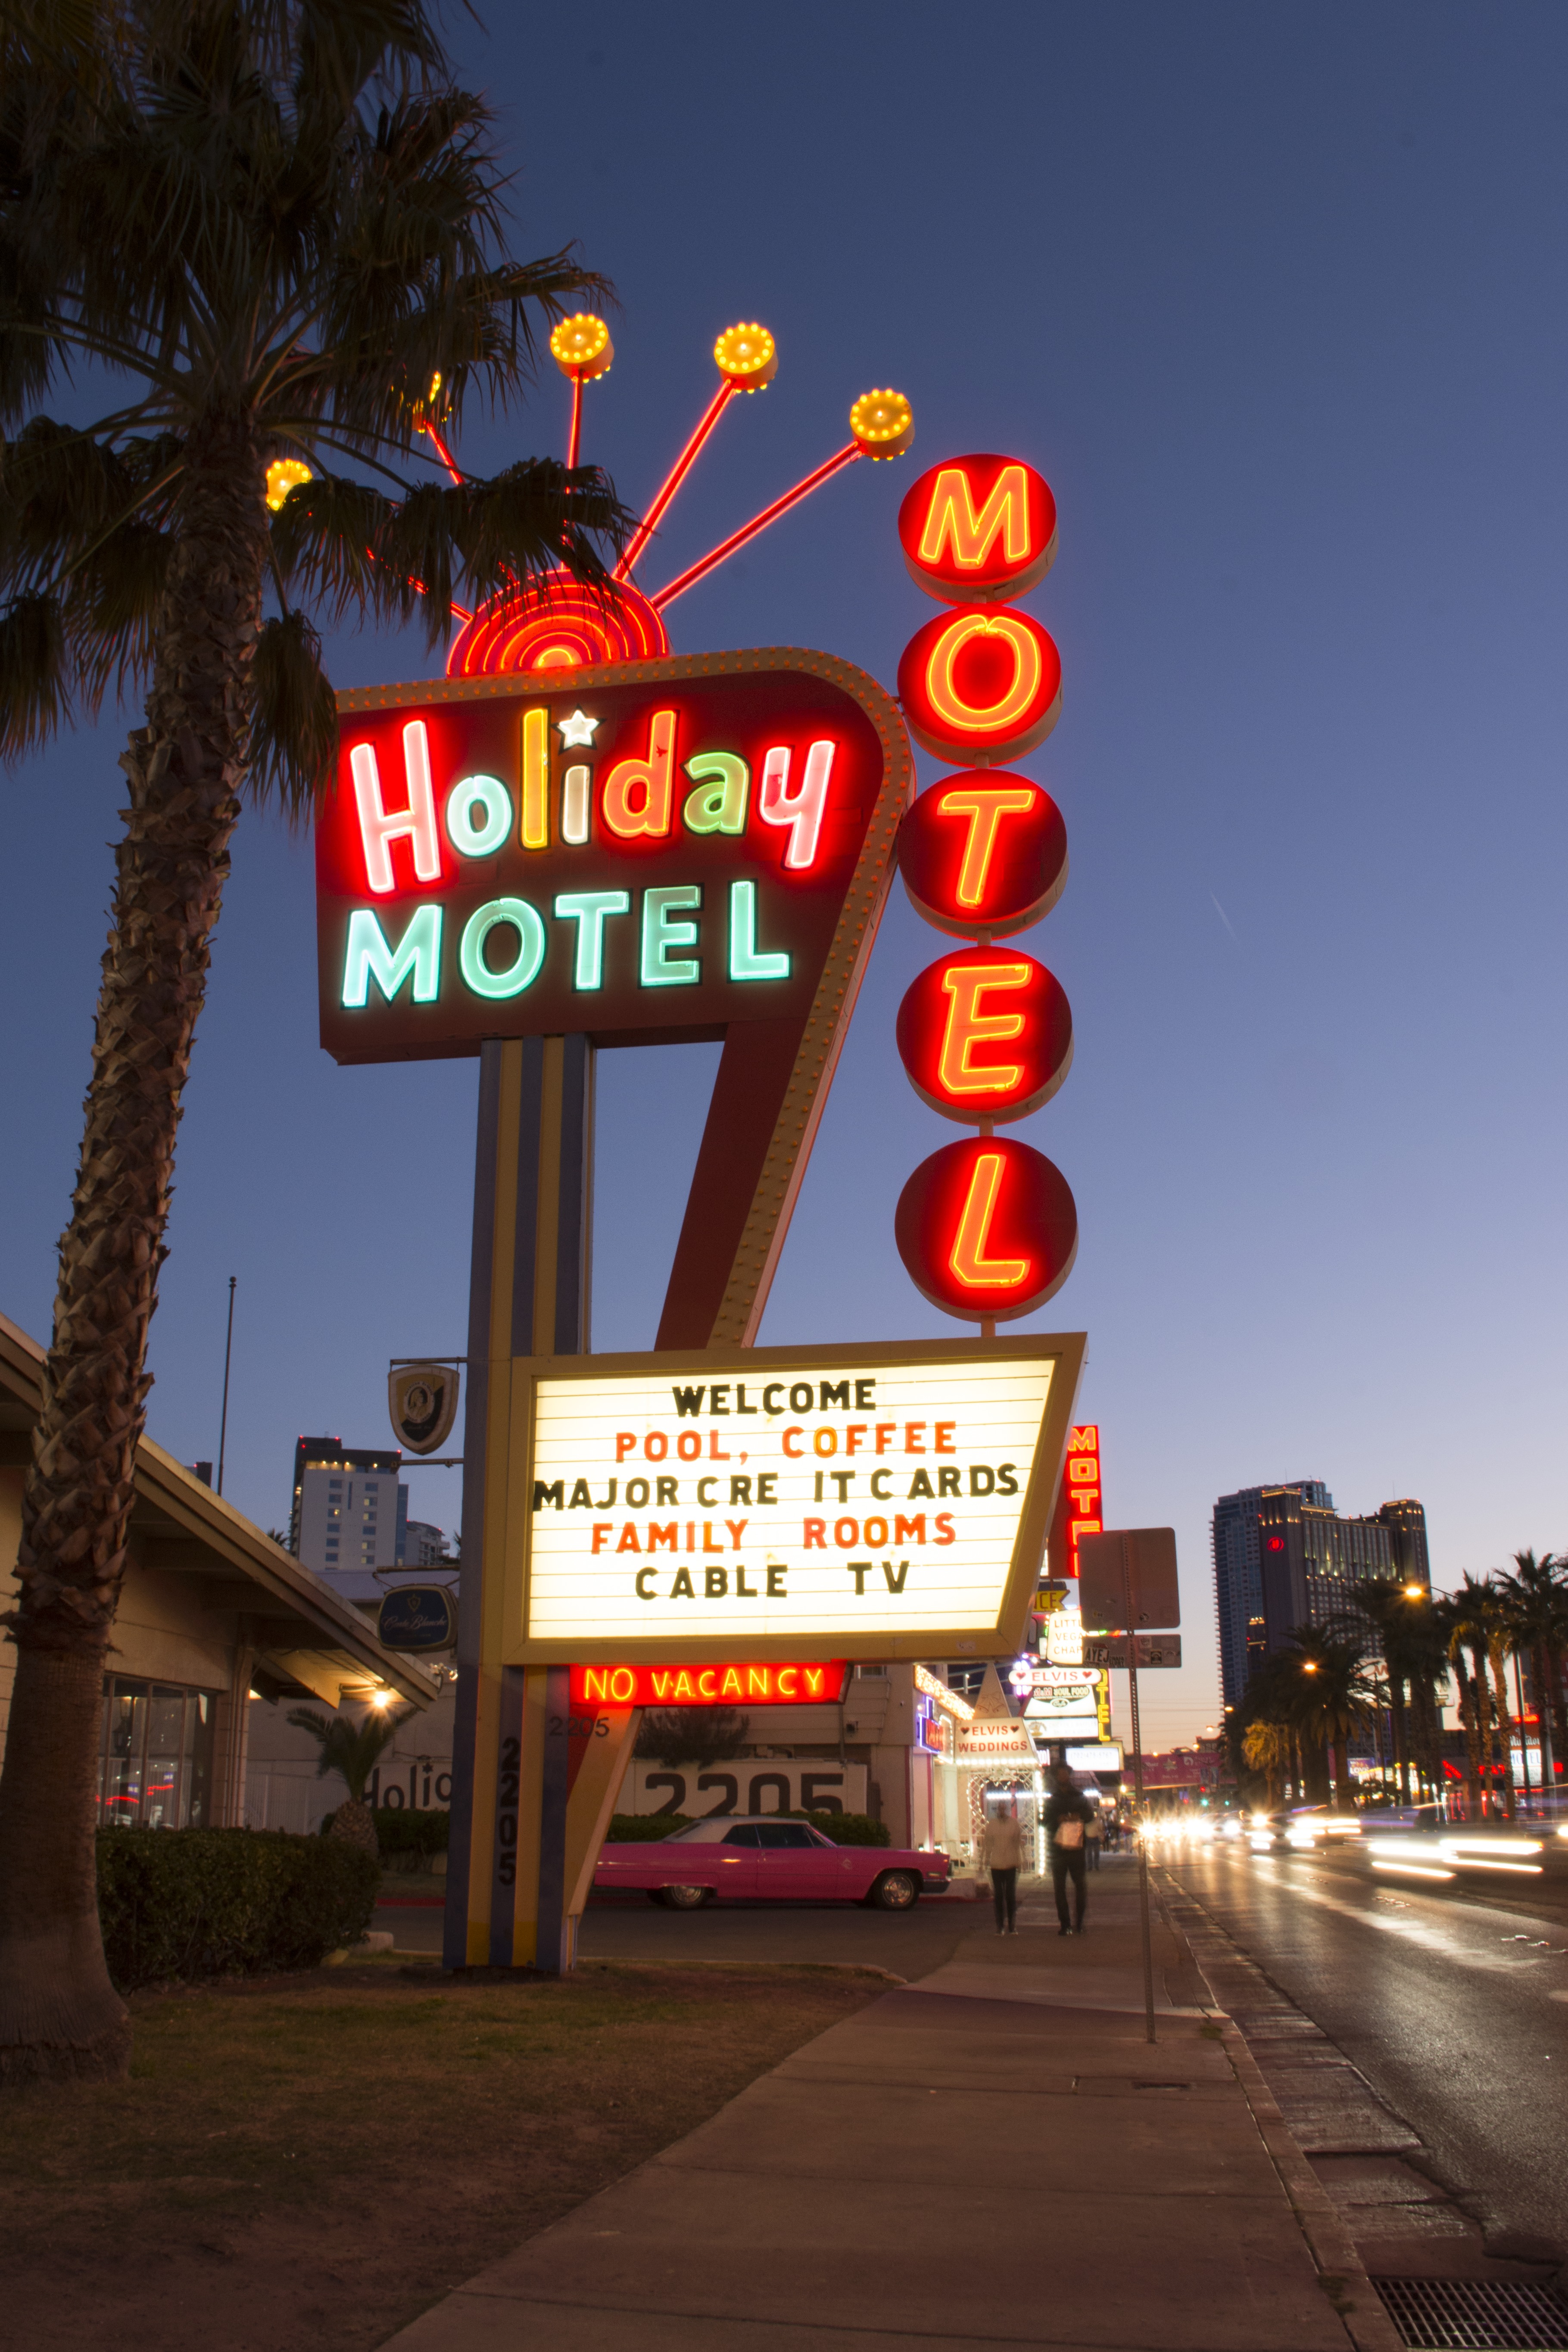 Photographs of Holiday Motel, Las Vegas (Nev.), March 1, 2017